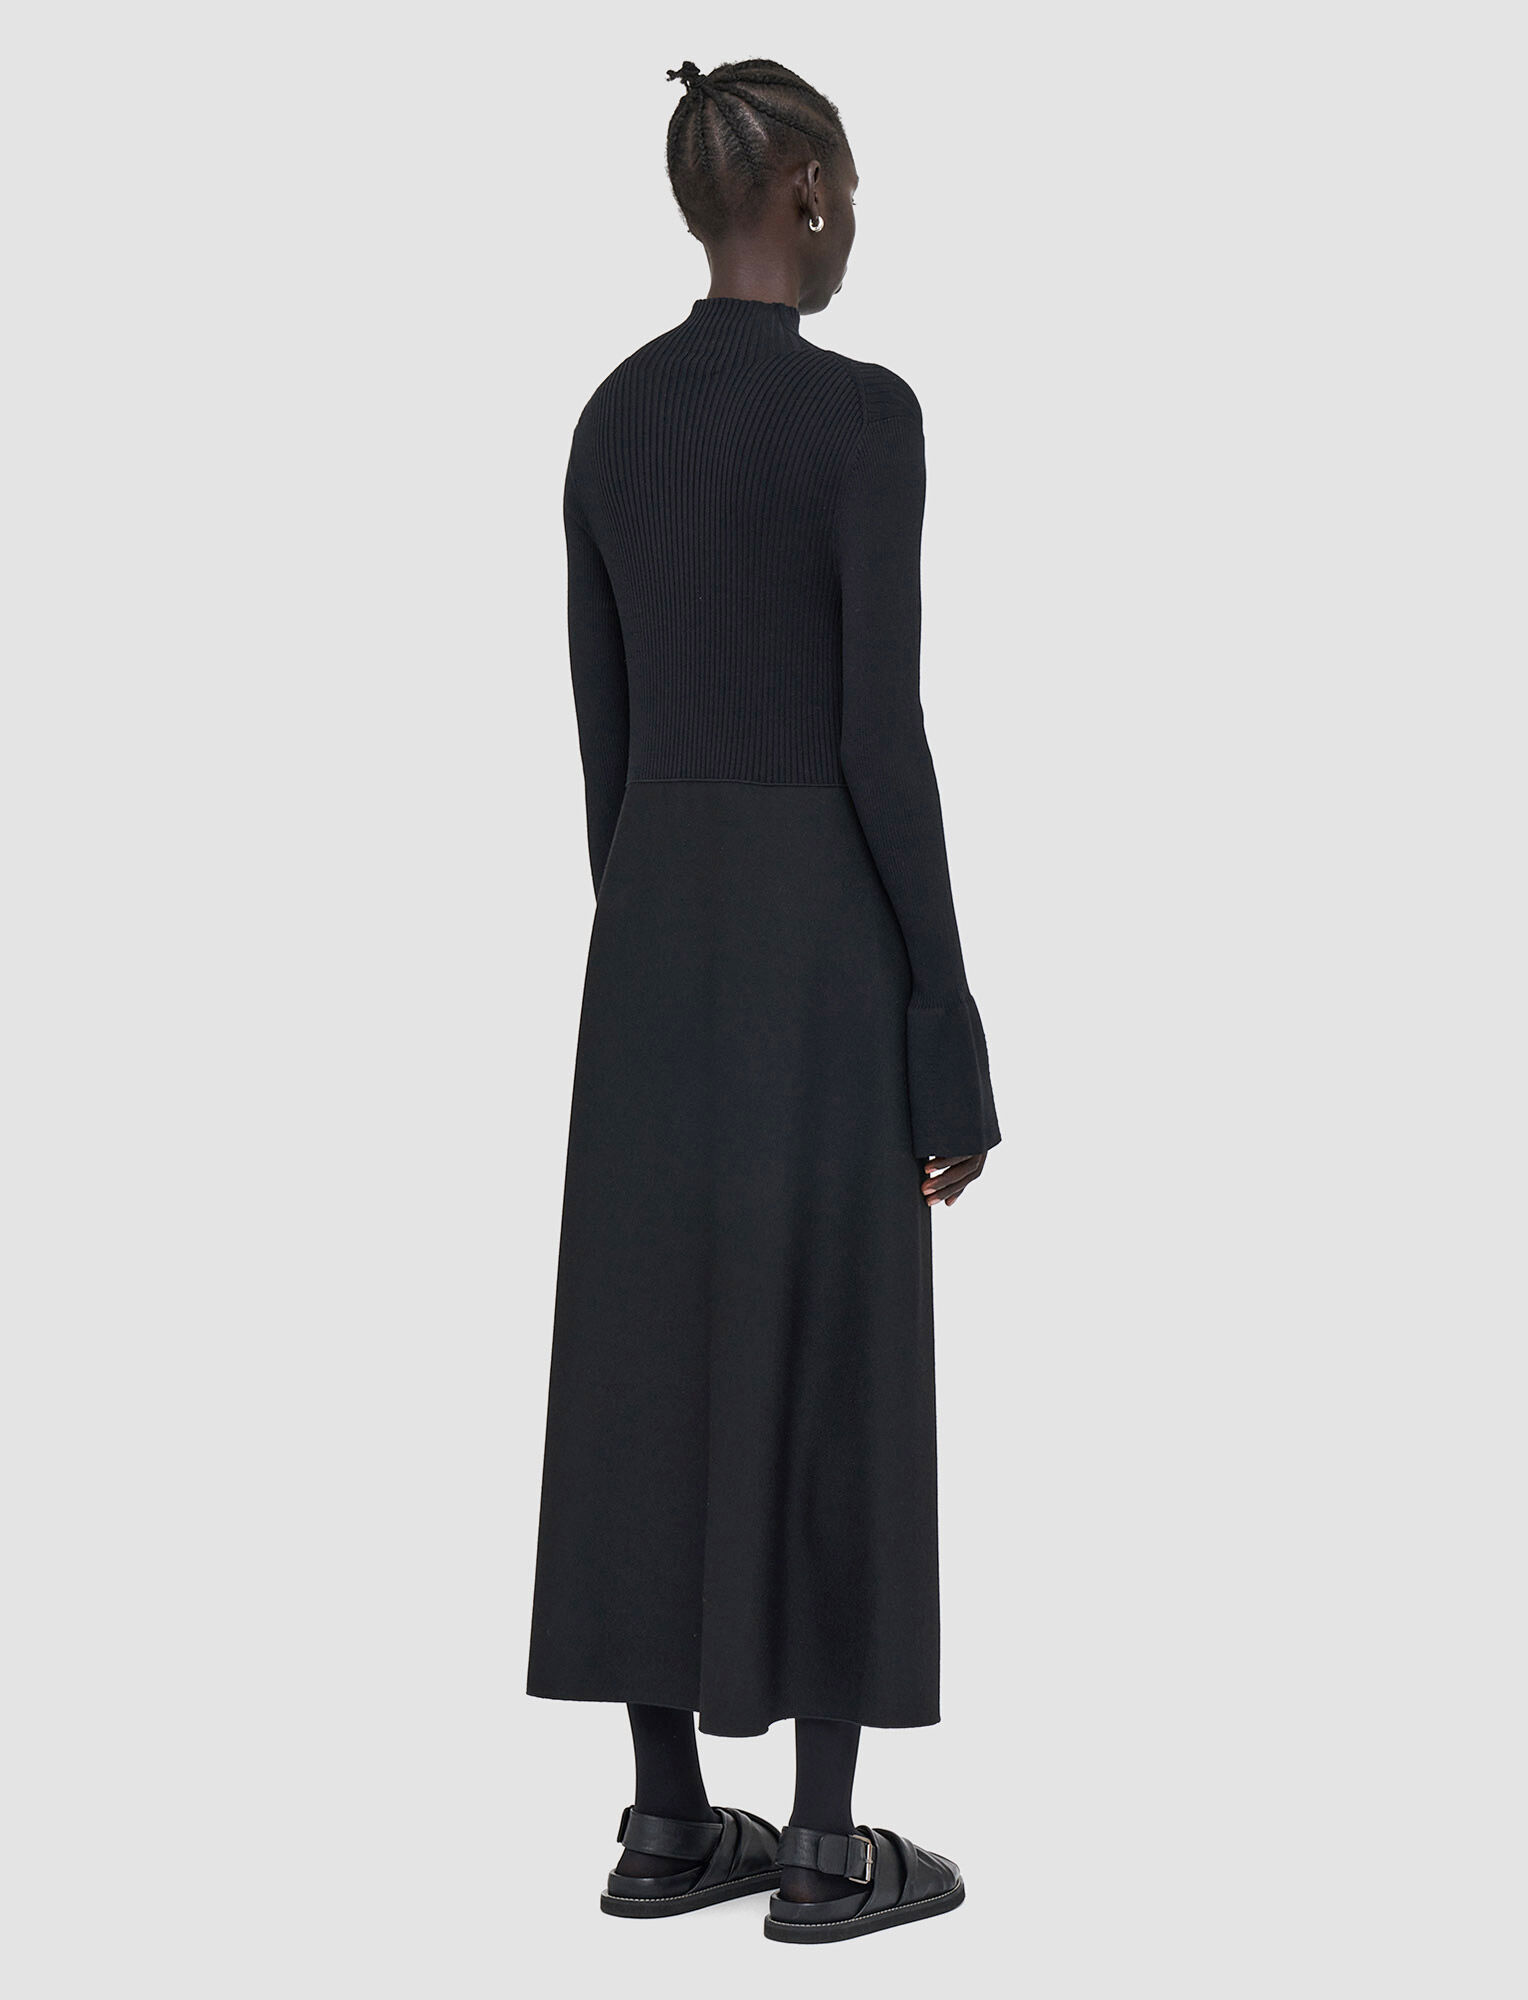 Joseph, Mixed Media Duperre Dress, in Black